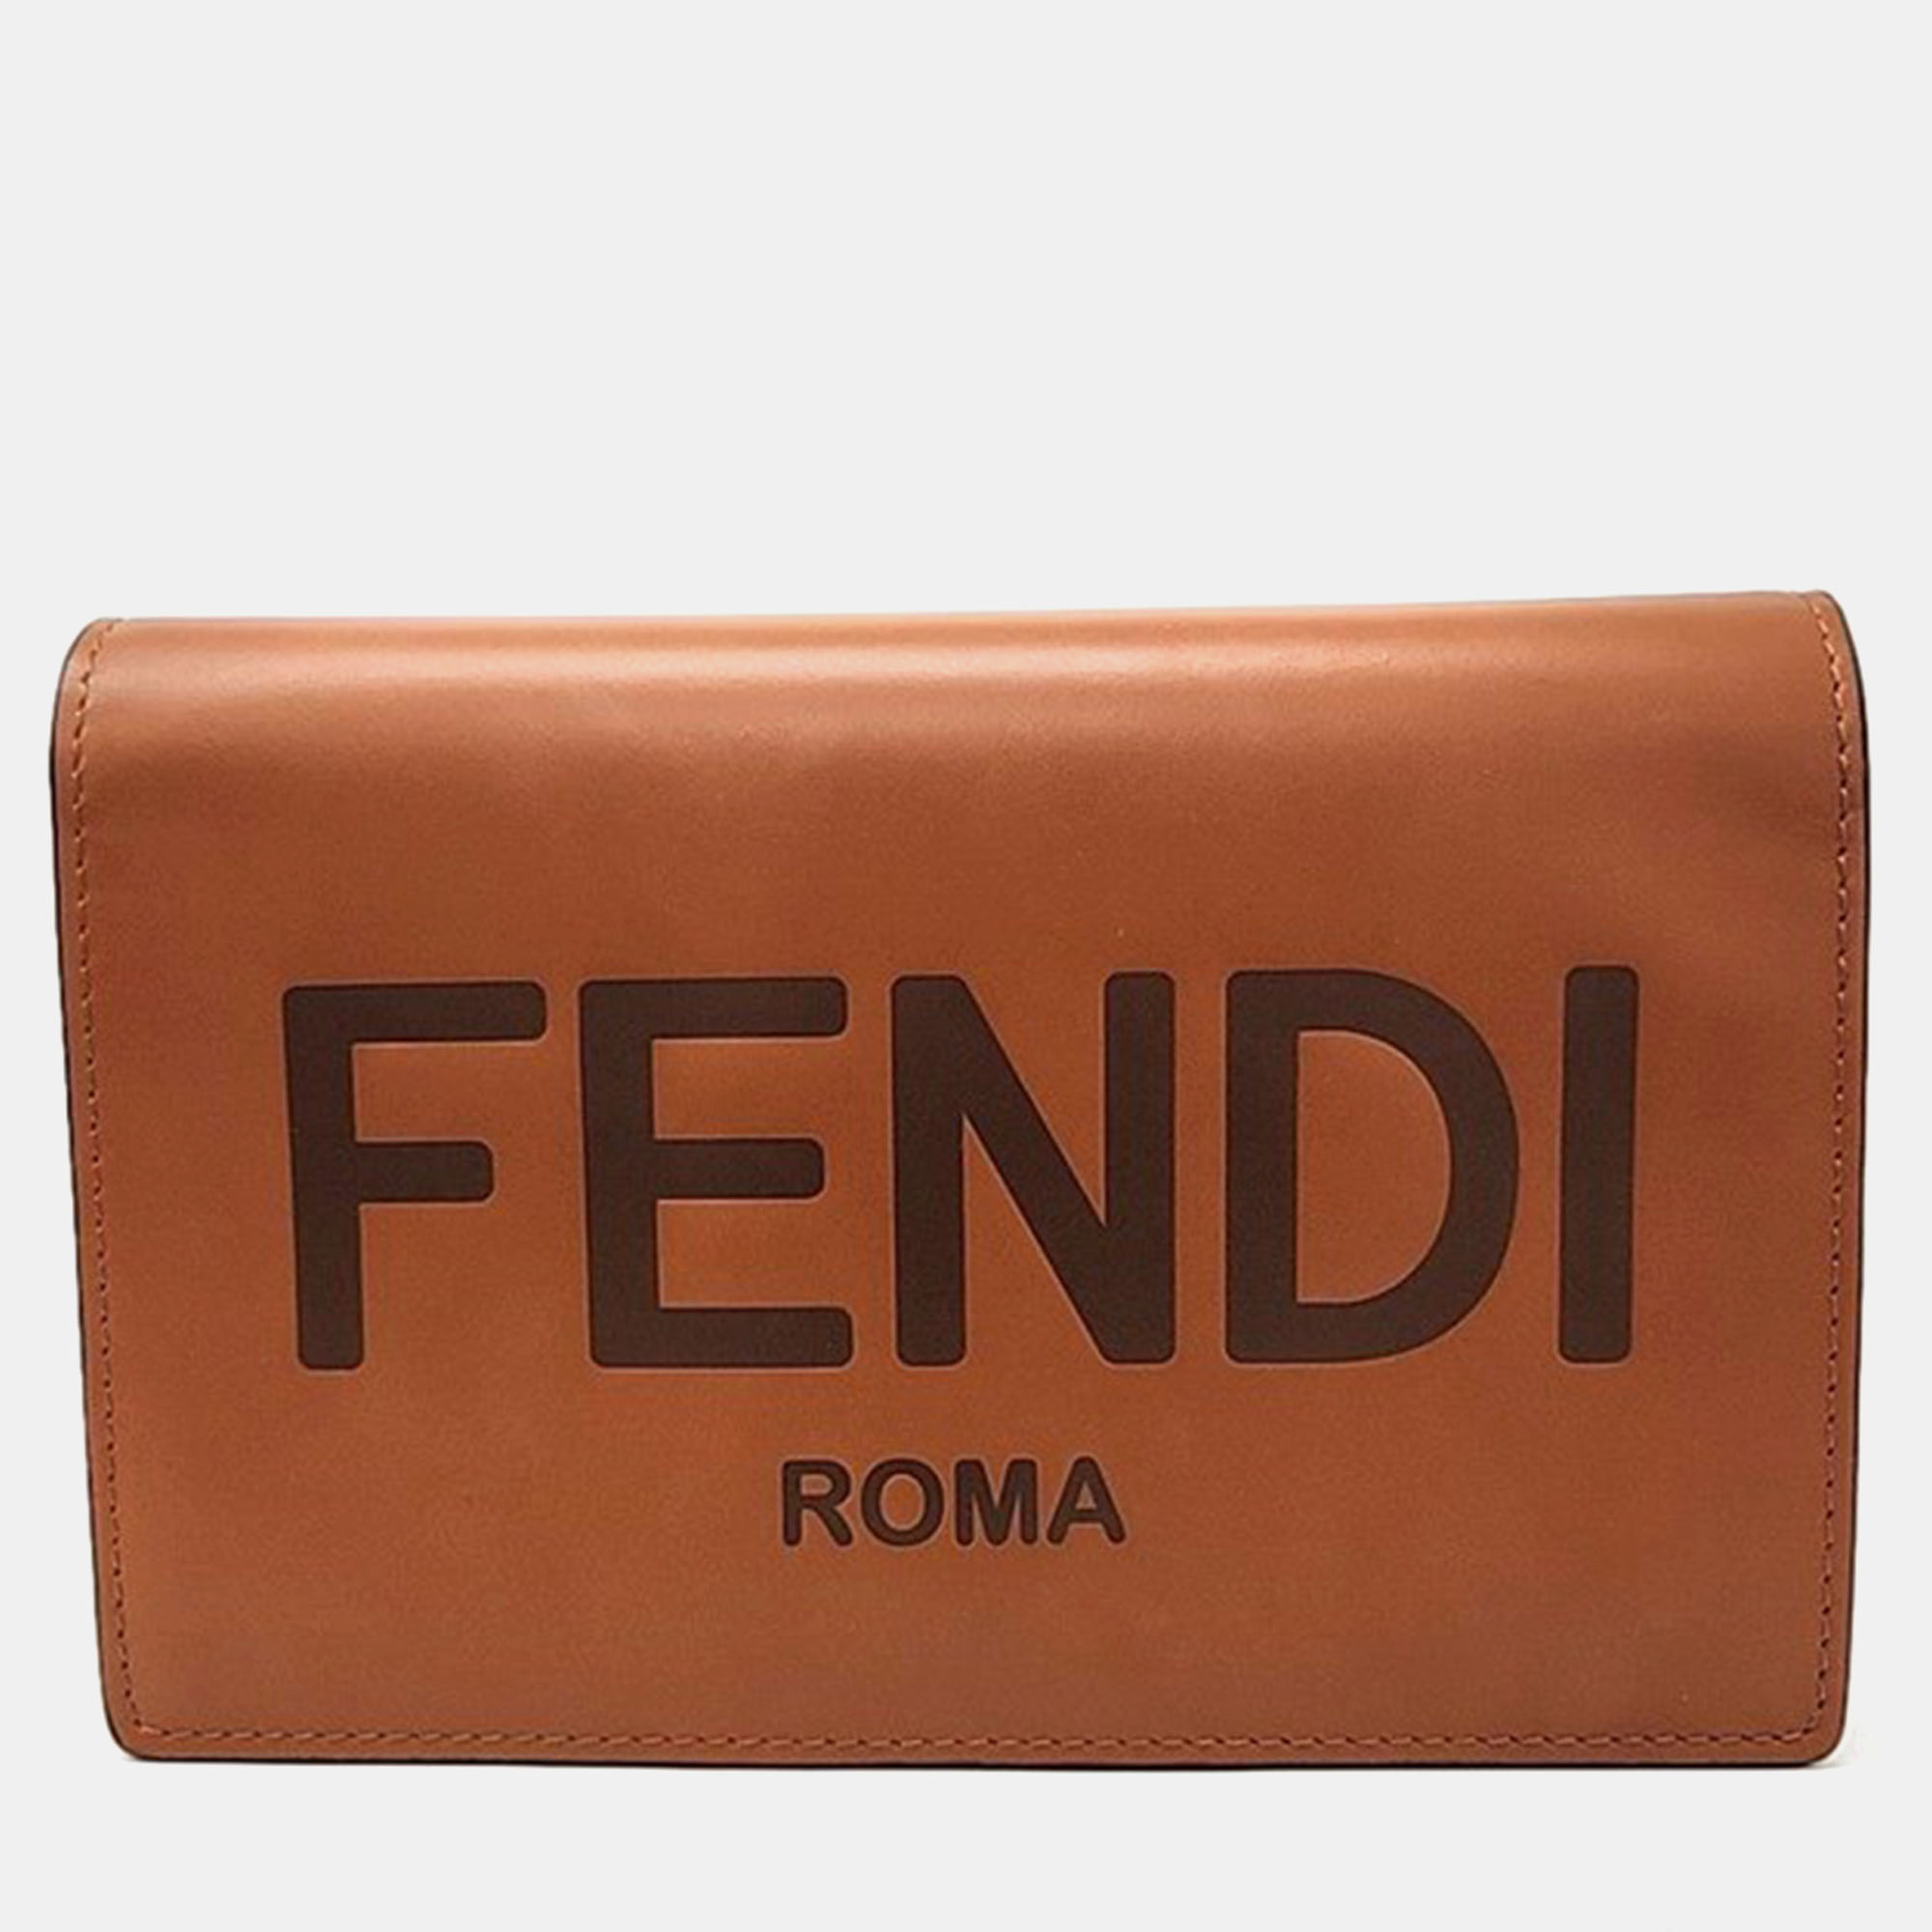 Fendi logo chain wallet crossbosy bag